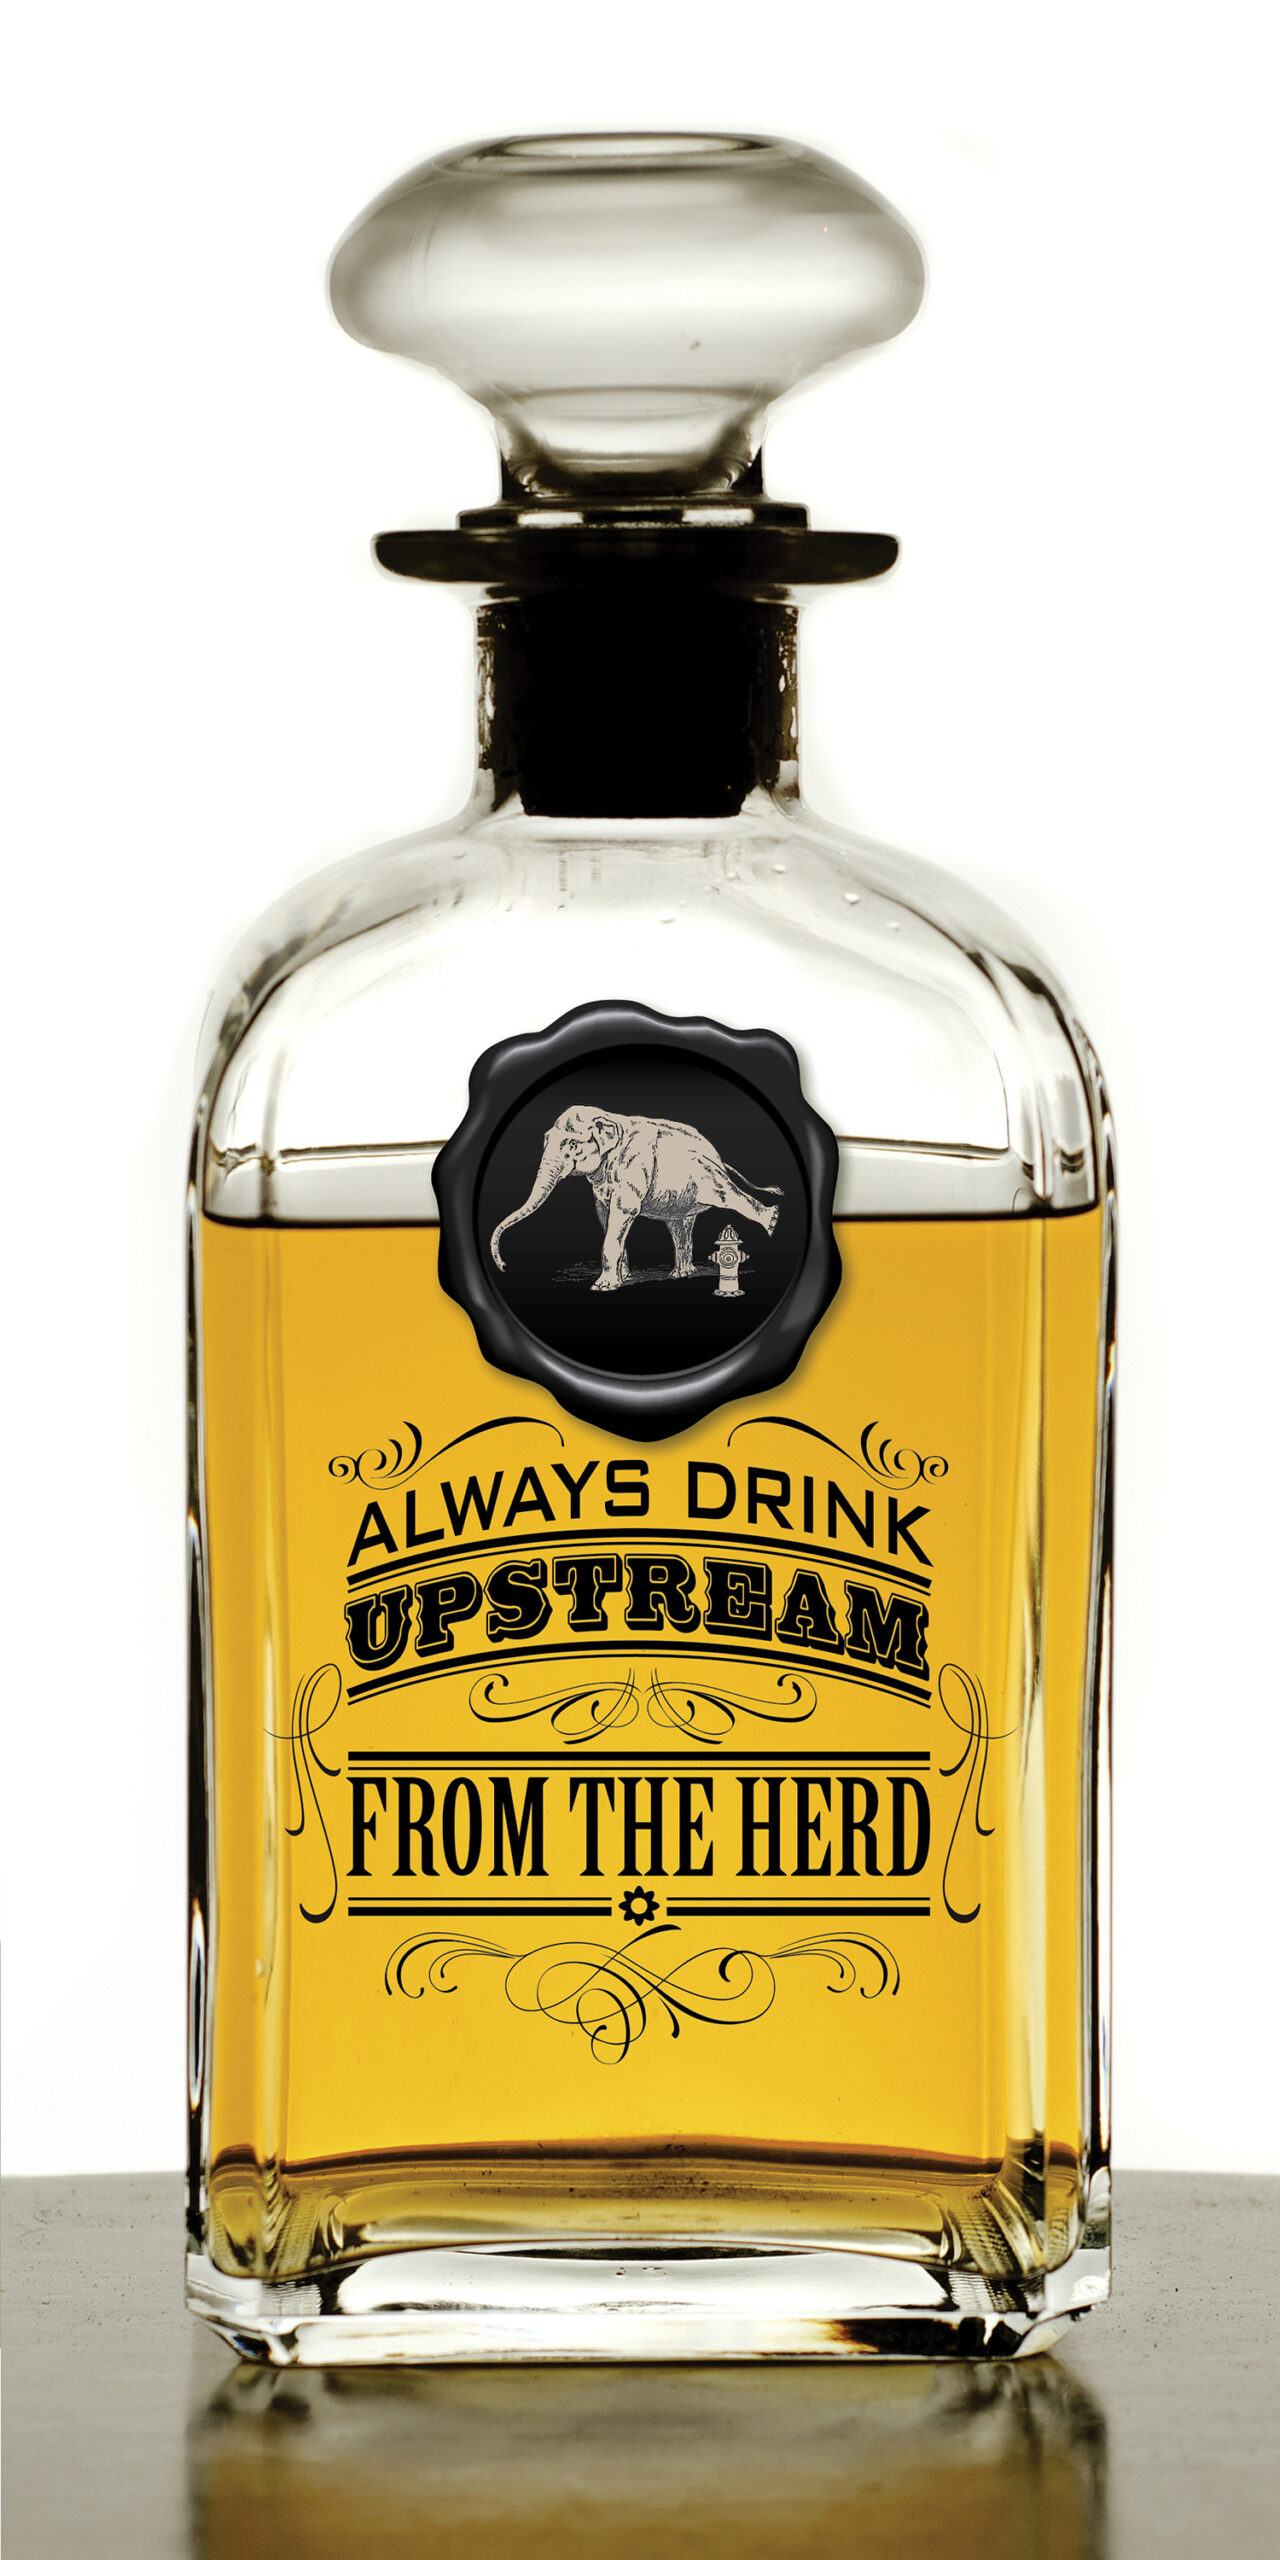 Jeff Kern design for "Always Drink Upstream"